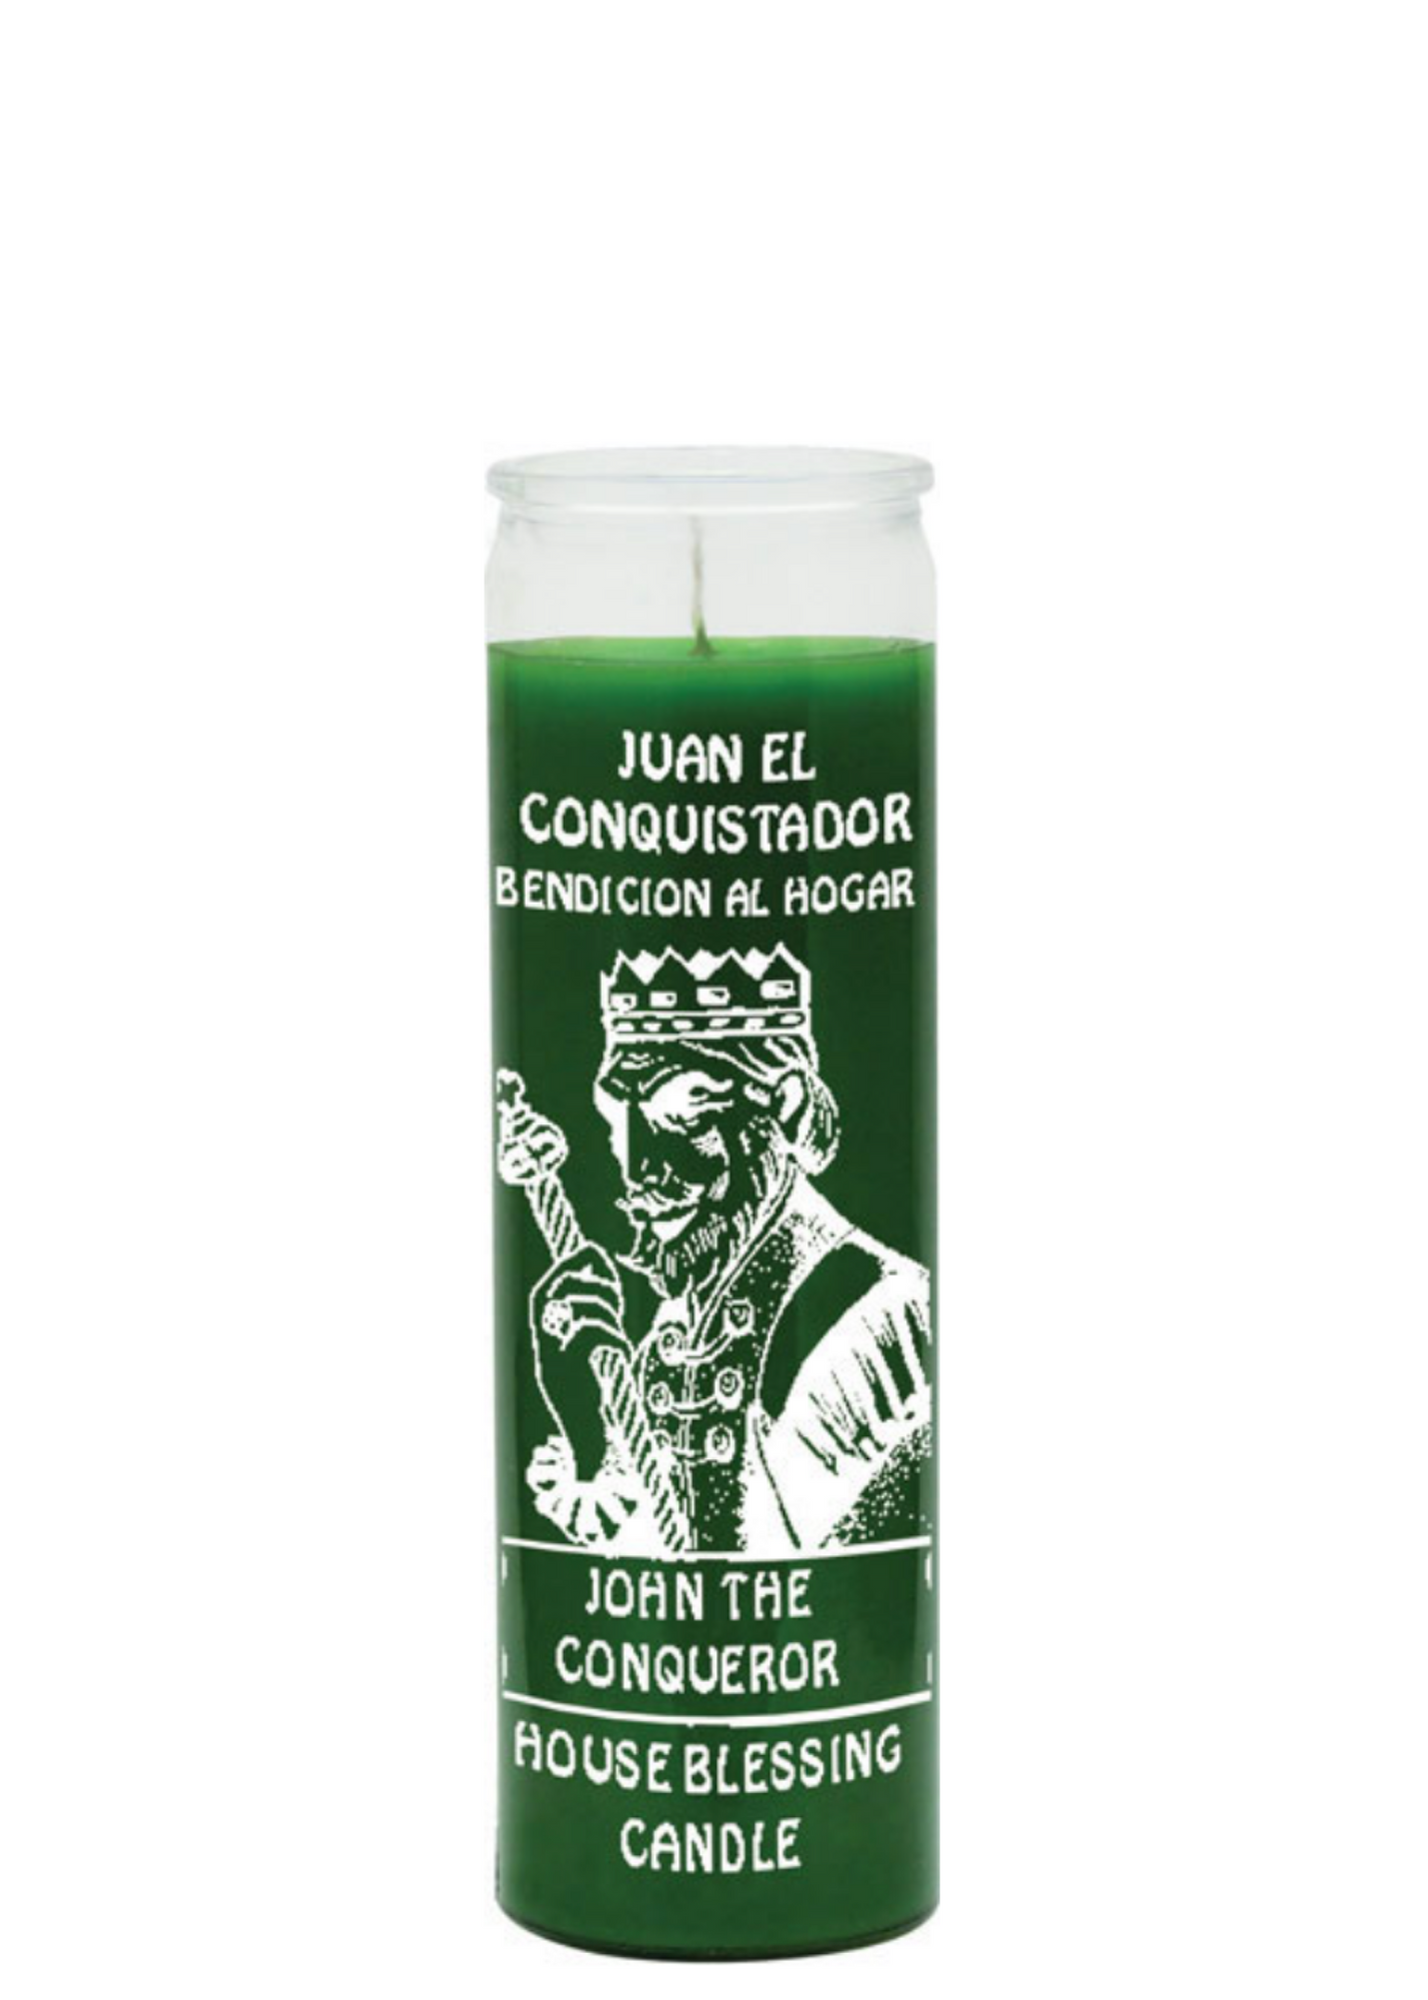 JOHN THE CONQUEROR (Green) 1 COLOR 7 DAY CANDLE